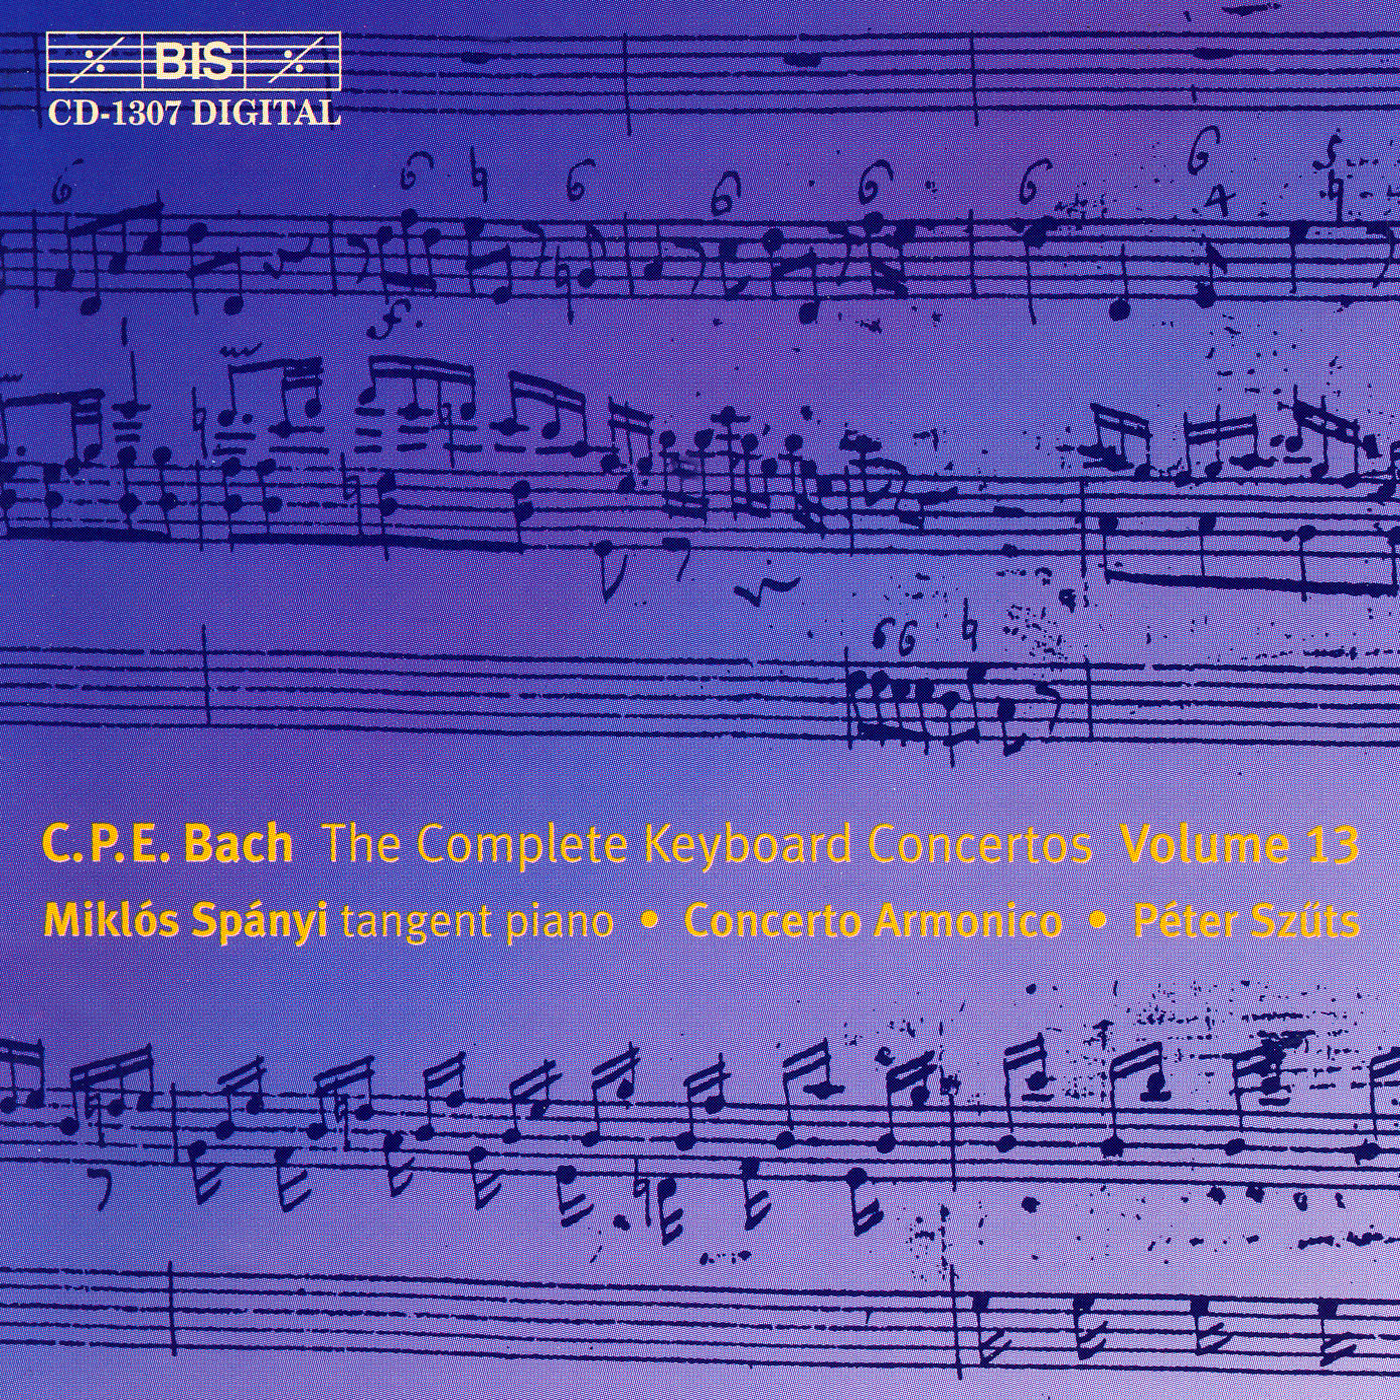 BACH, C. P. E.: Keyboard Concertos Complete, Vol. 13 Spa nyi, Concerto Armonico Budapest  Keyboard Concertos, Wq. 22